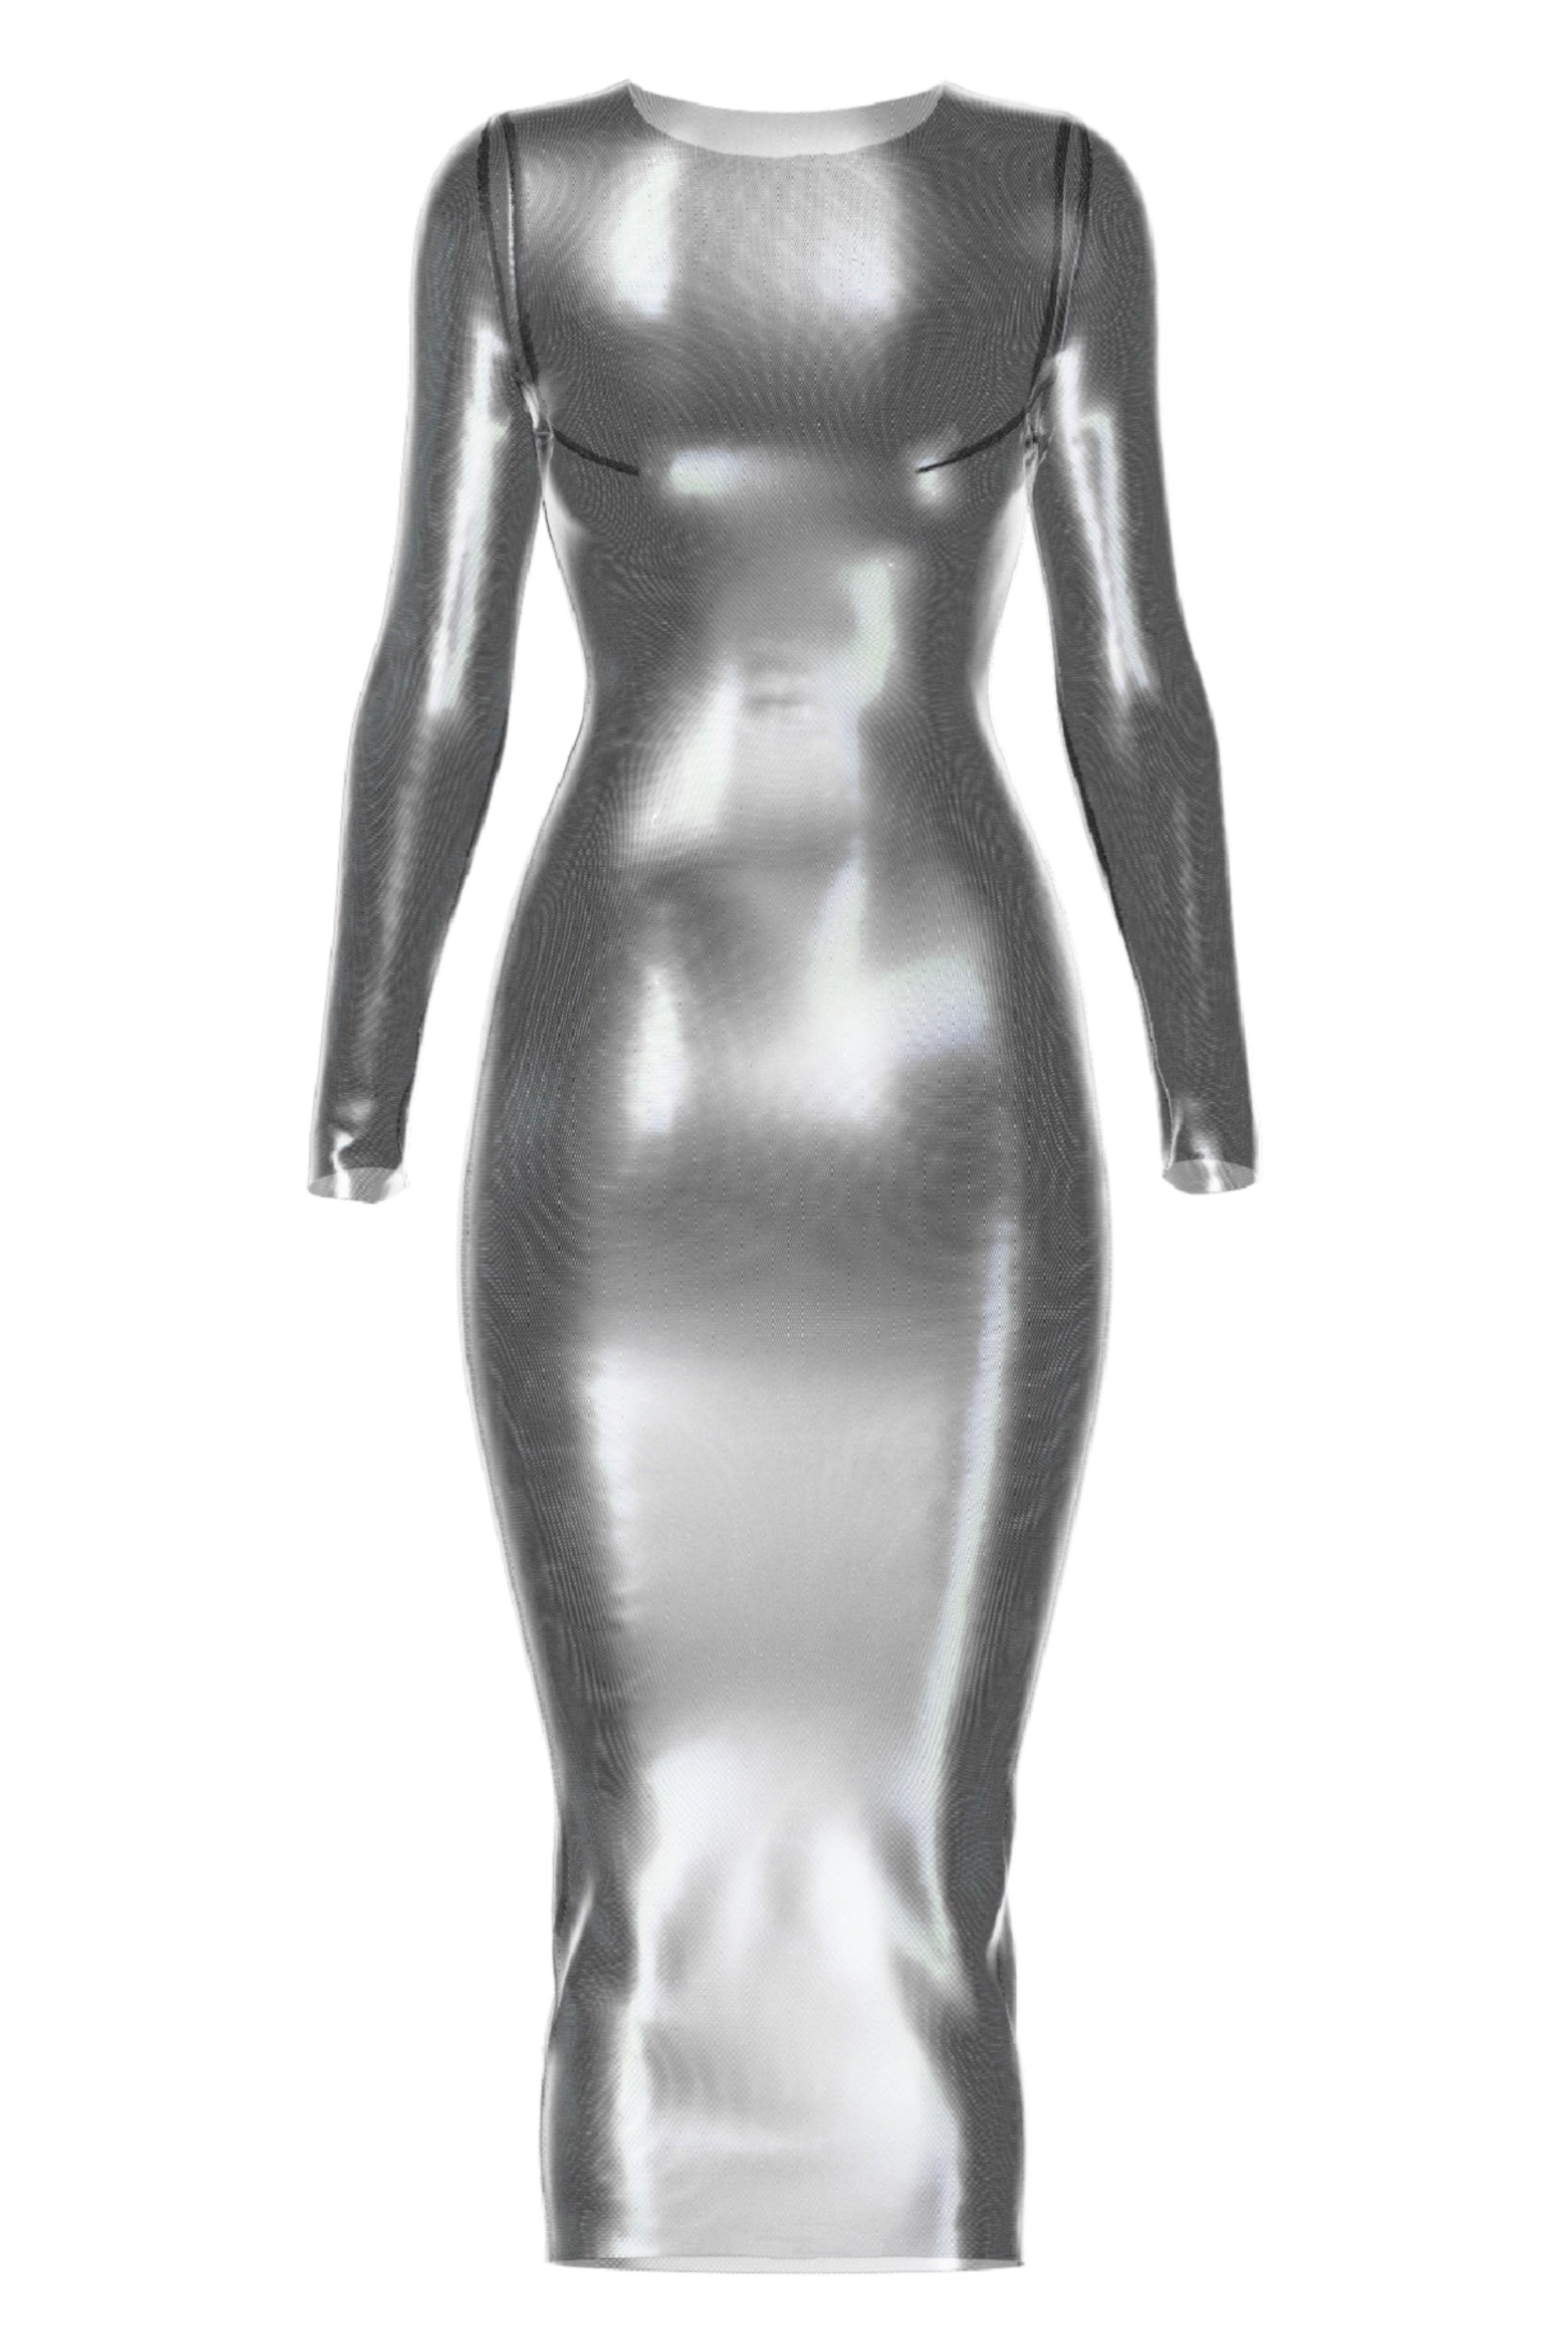 Tefia silver long dress - yesUndress